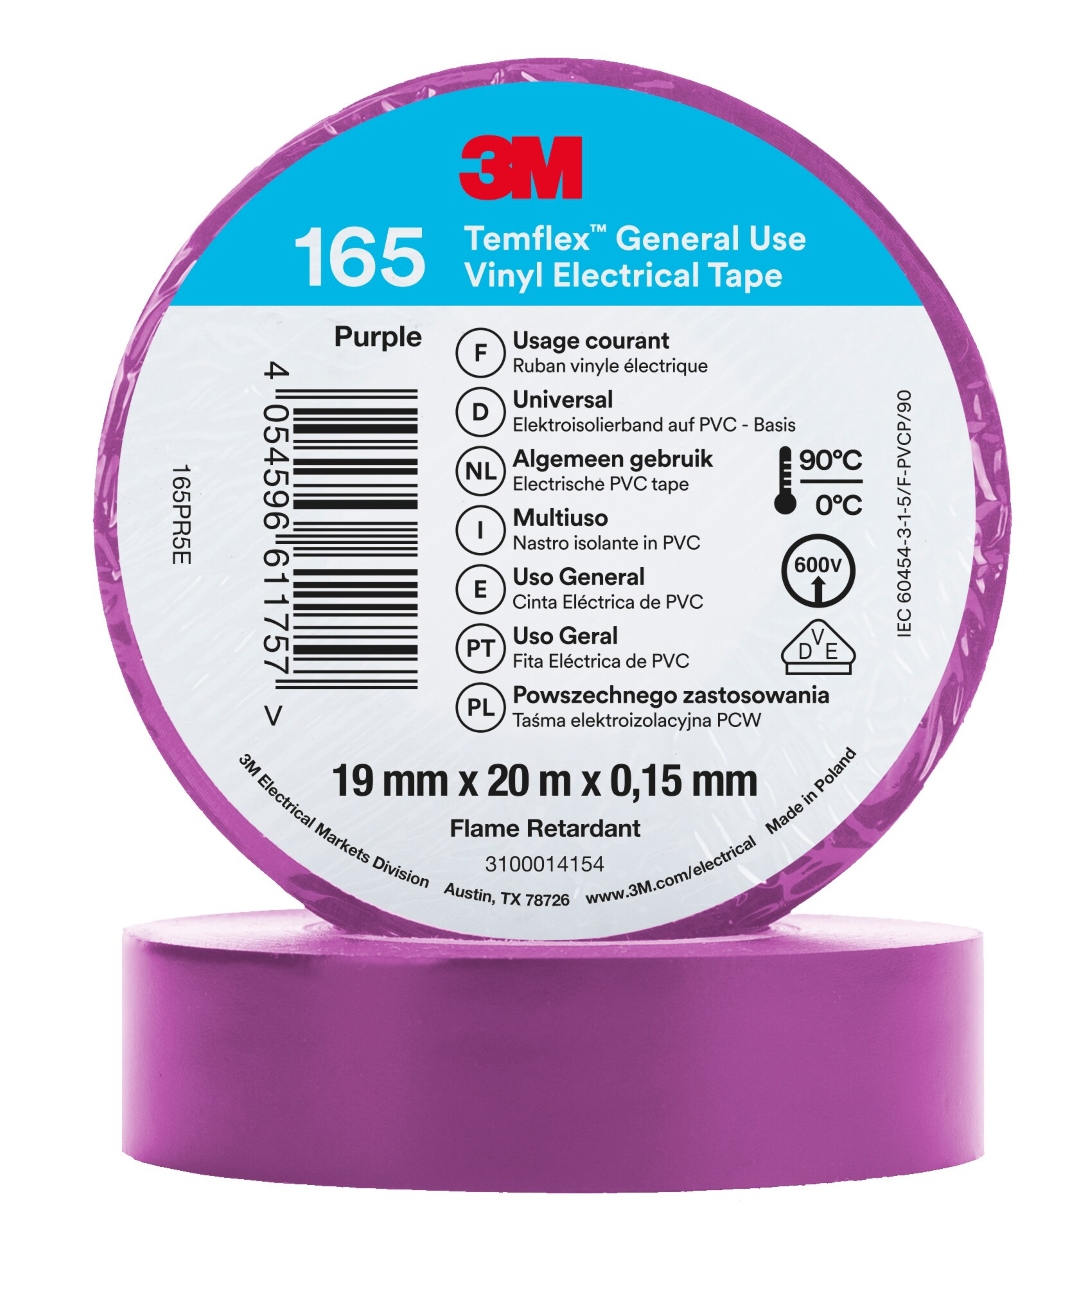 3M Temflex 165 vinyl electrical insulating tape, purple, 19 mm x 20 m, 0.15 mm